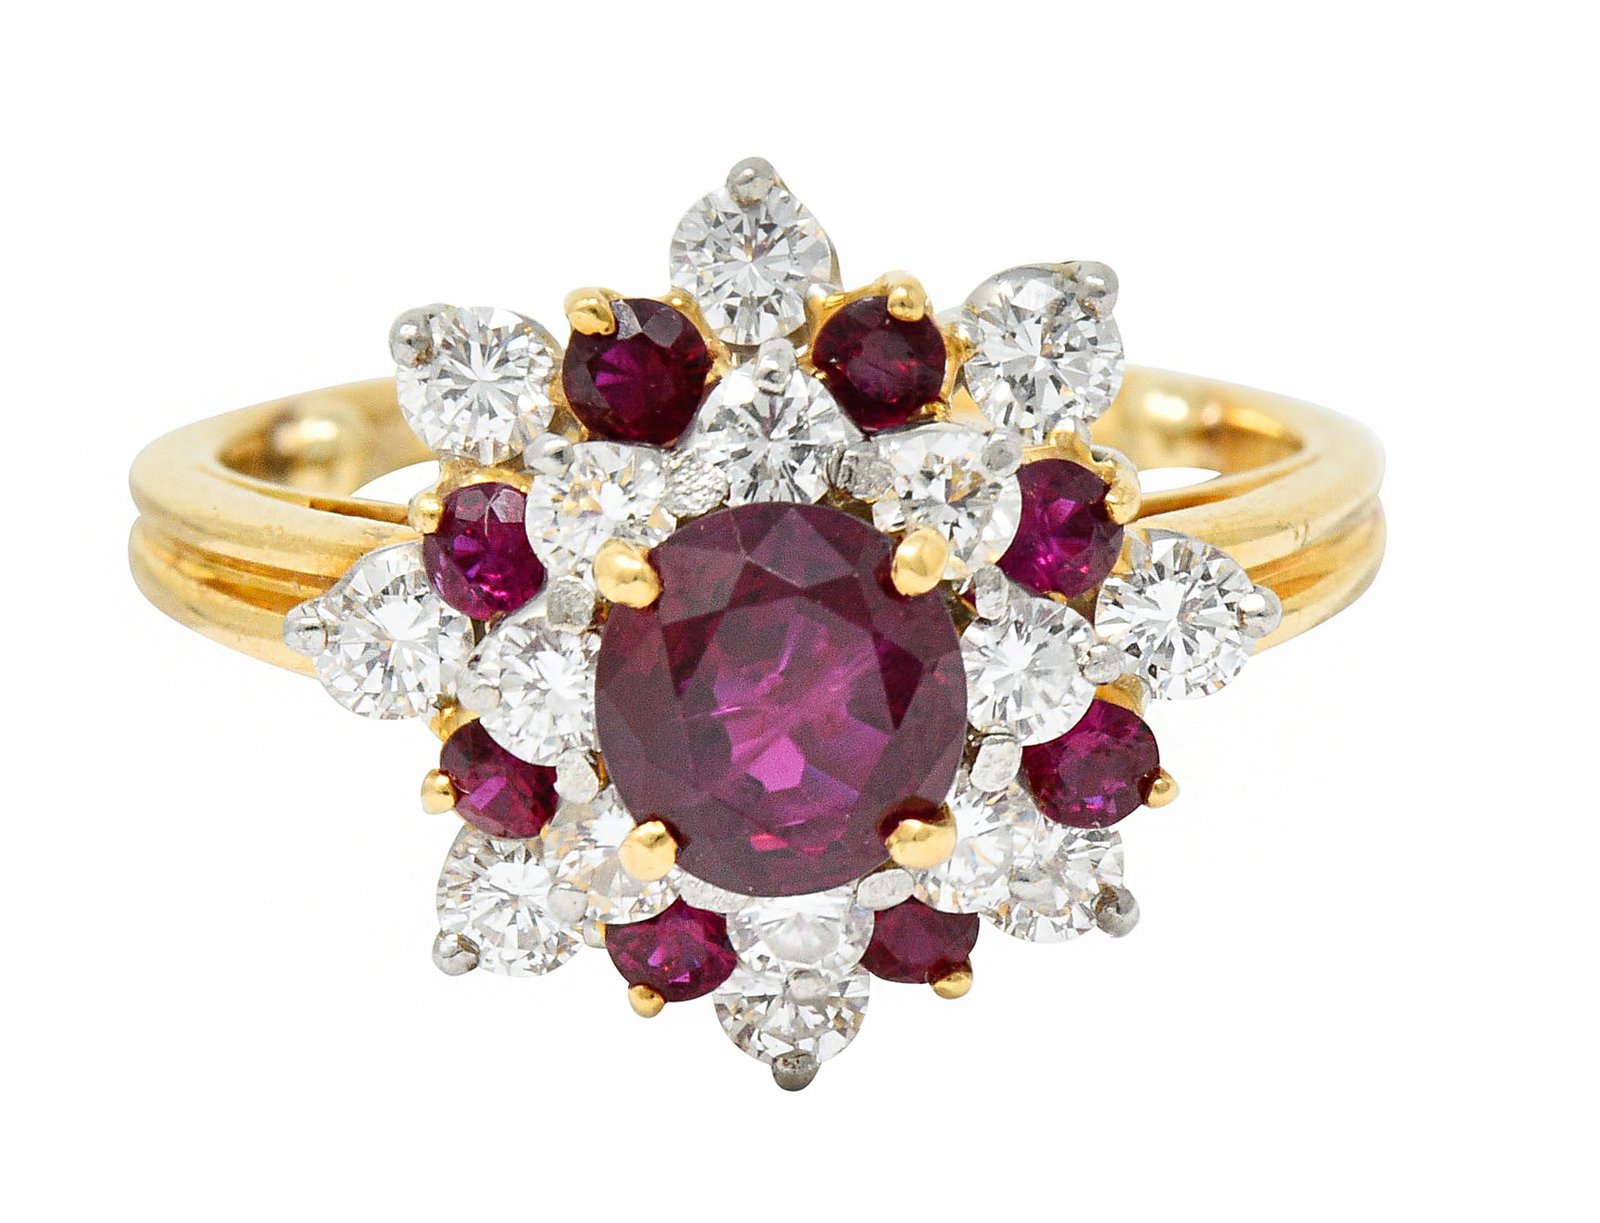 JE Caldwell Oscar Heyman Designer Ruby Diamond Cluster Ring